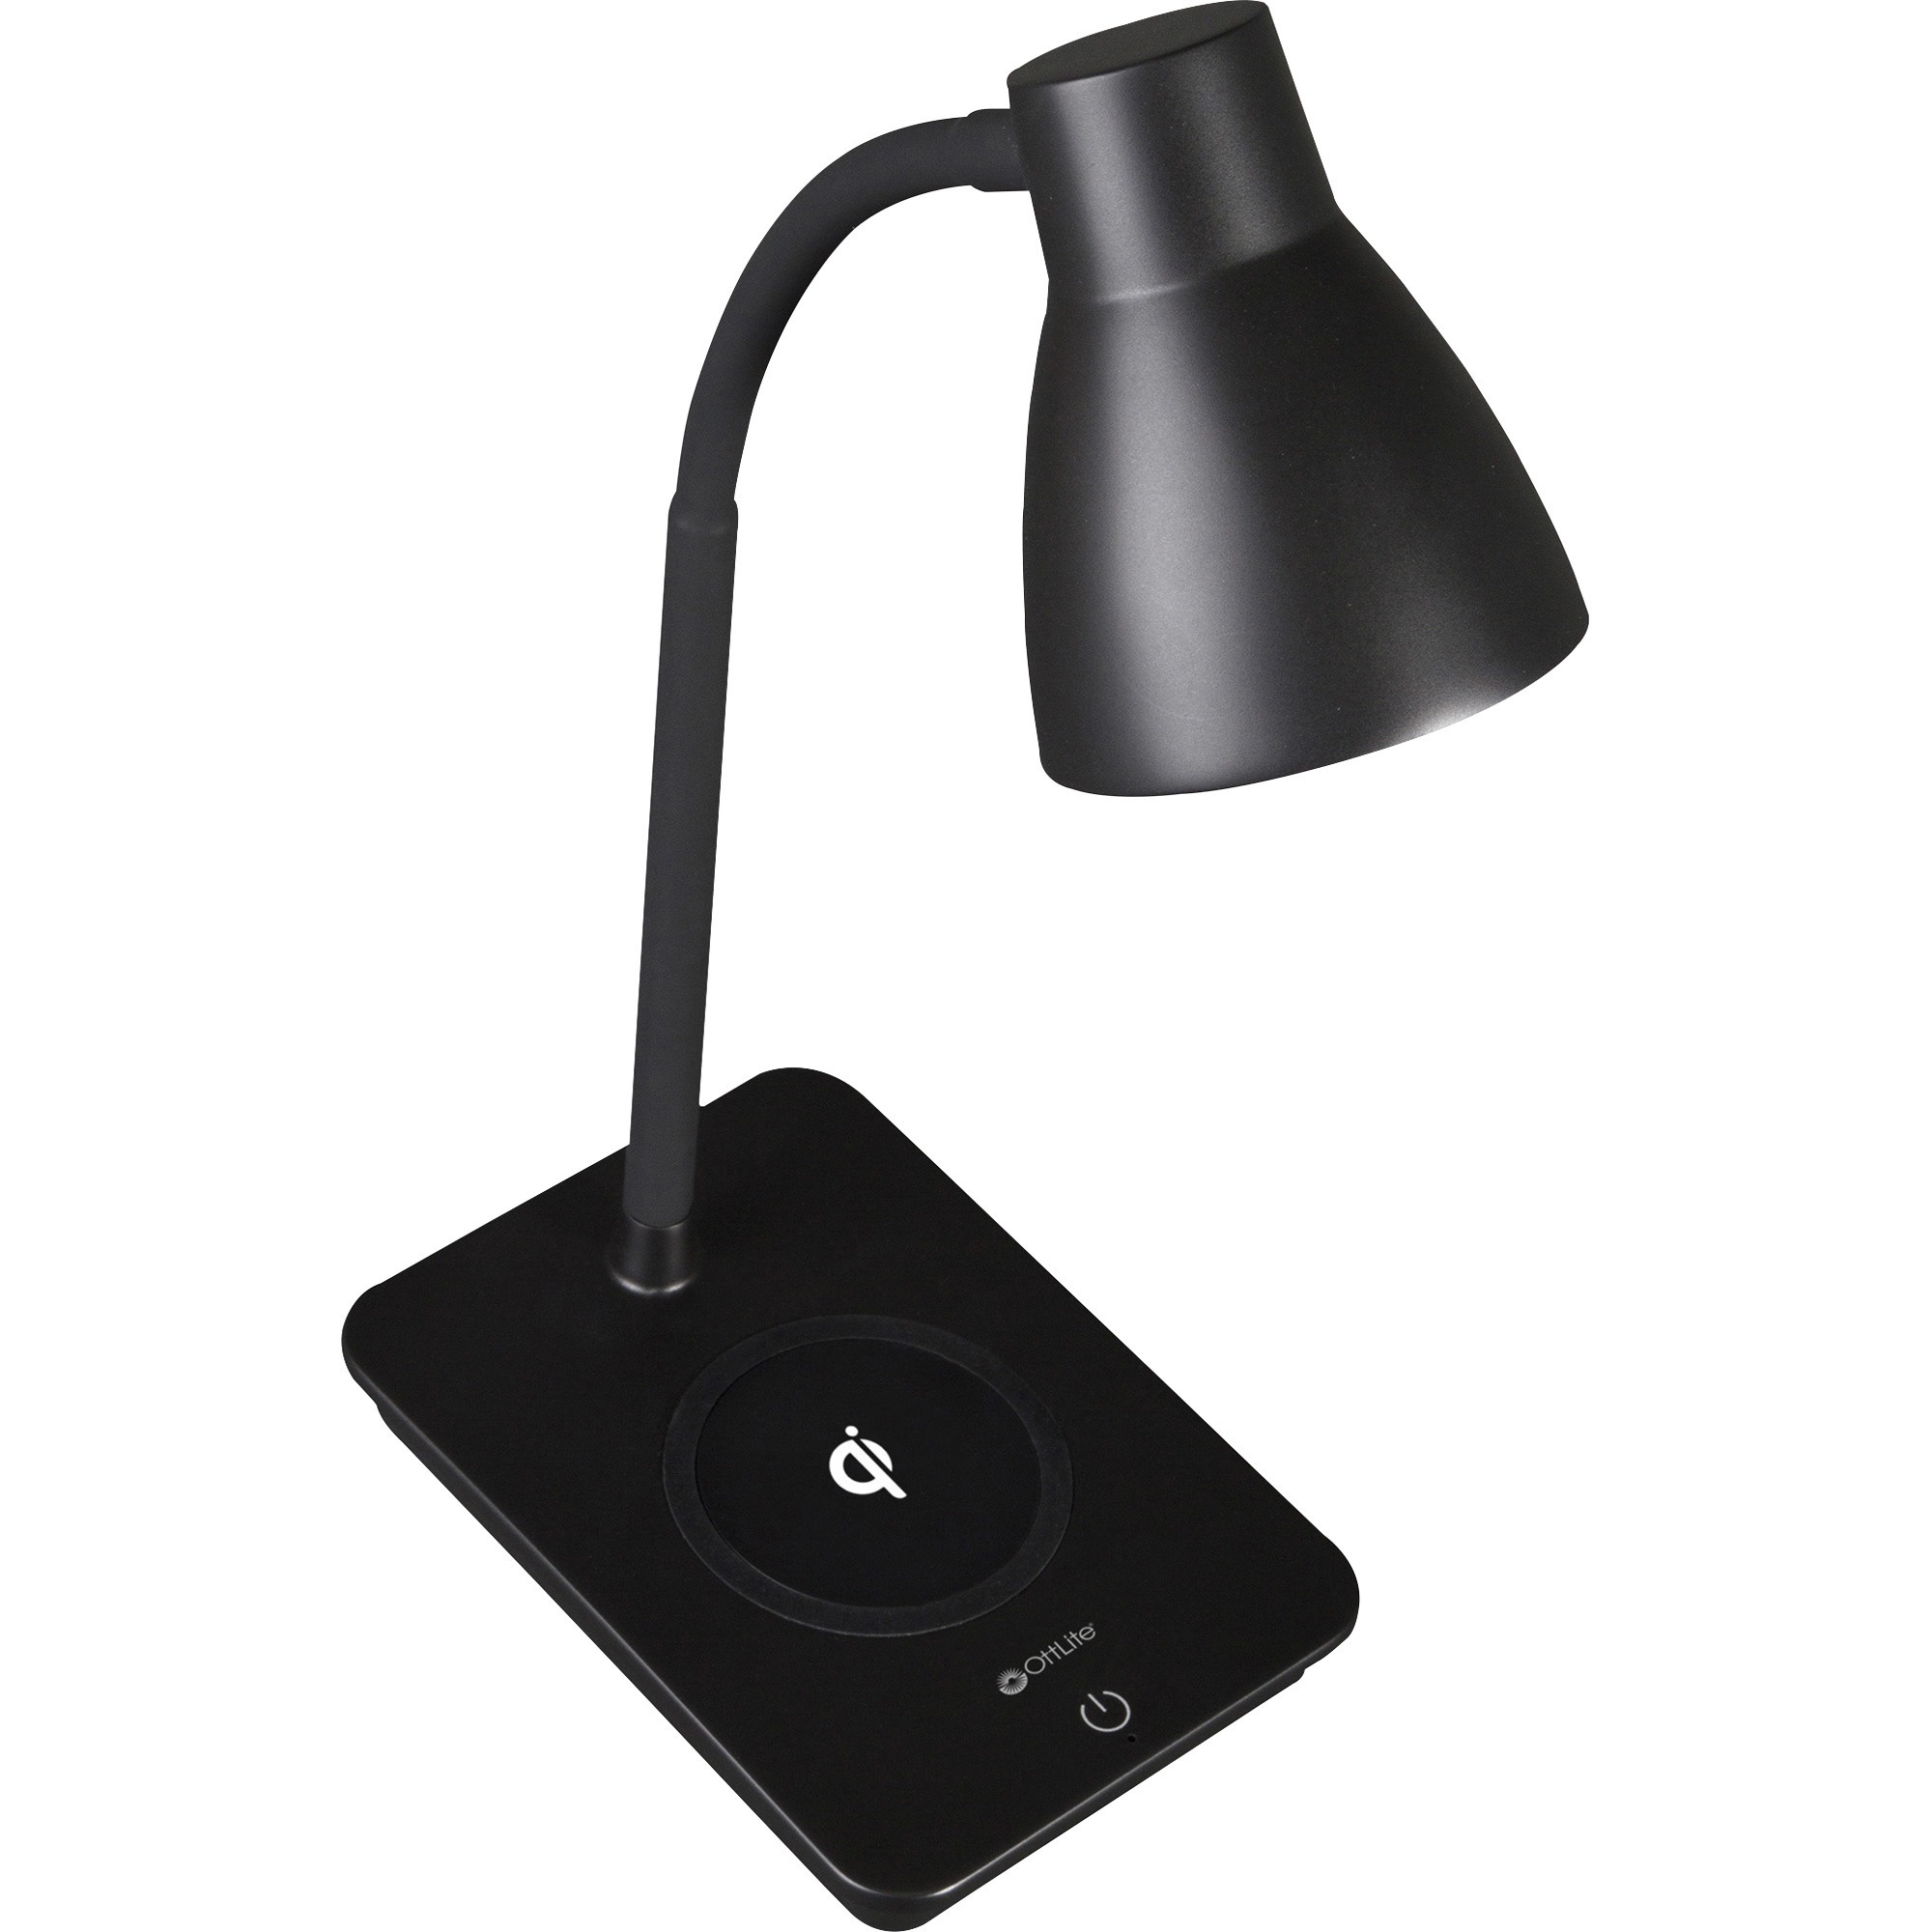 Ottlite Wellness Series Renew LED Desk Lamp F1DY8BW9-SHPR